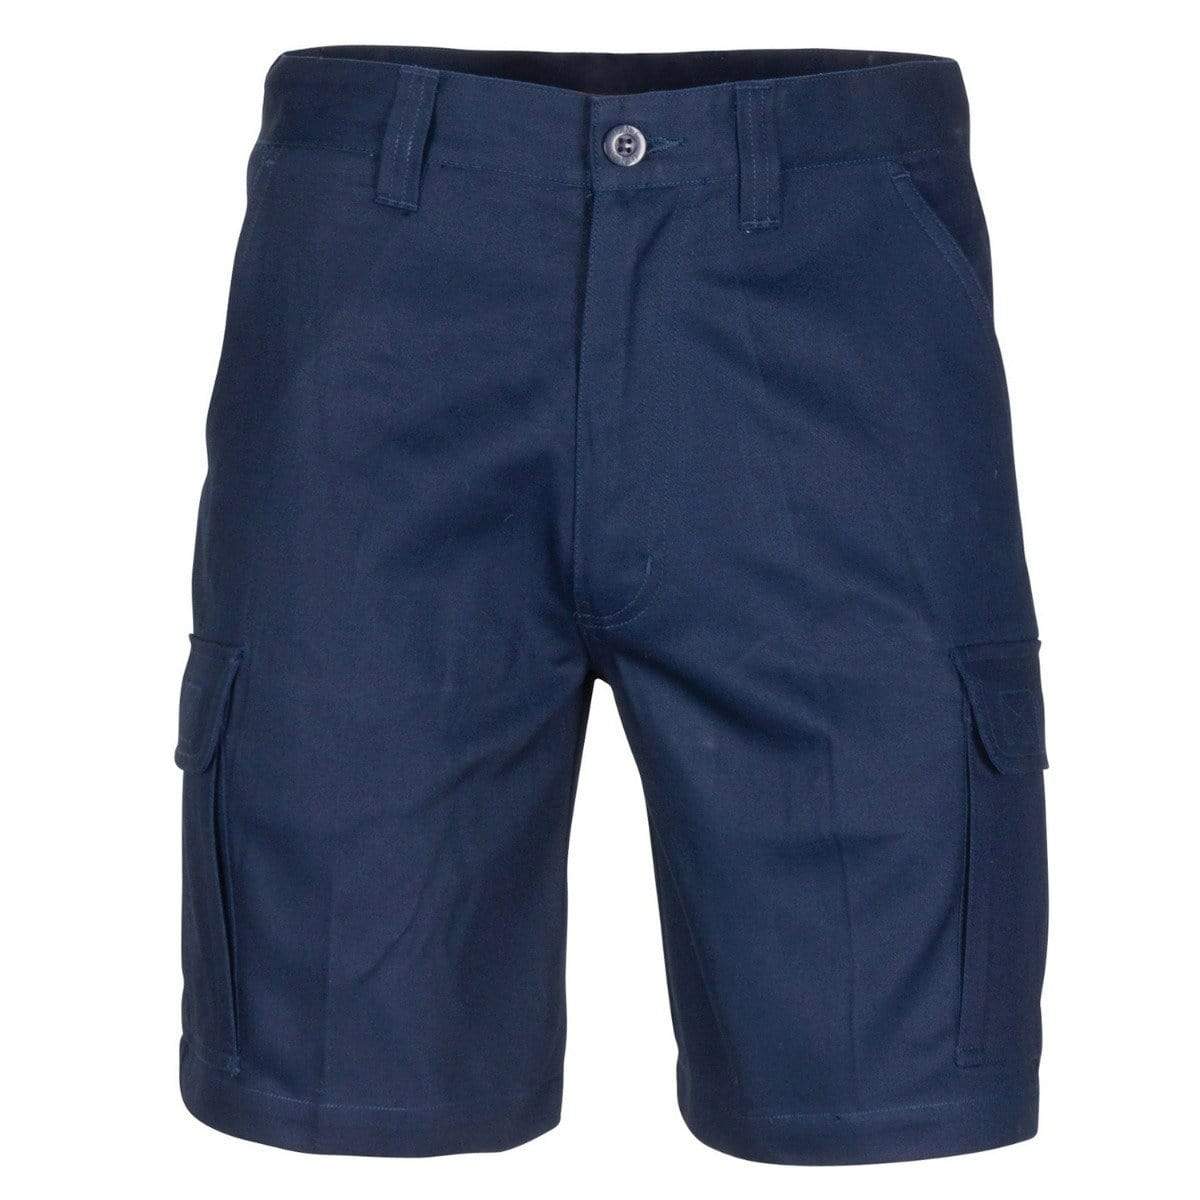 Dnc Workwear Middle Weight Cotton Double Slant Cargo Shorts - With Shorter Leg Length - 3358 Work Wear DNC Workwear Navy 72R 